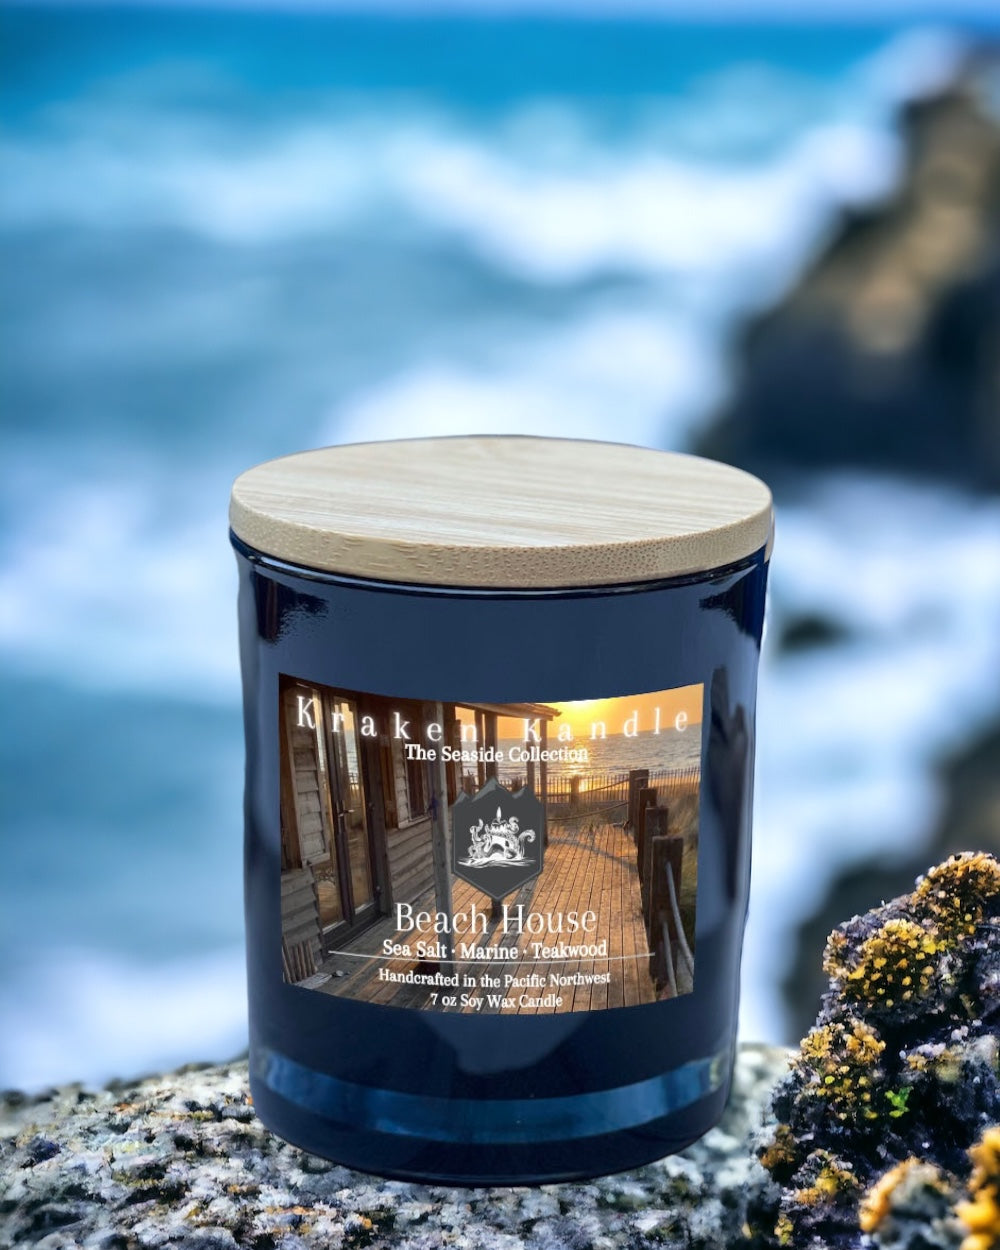 Sunset label of Beach House candle sea salt marine and Teakwood